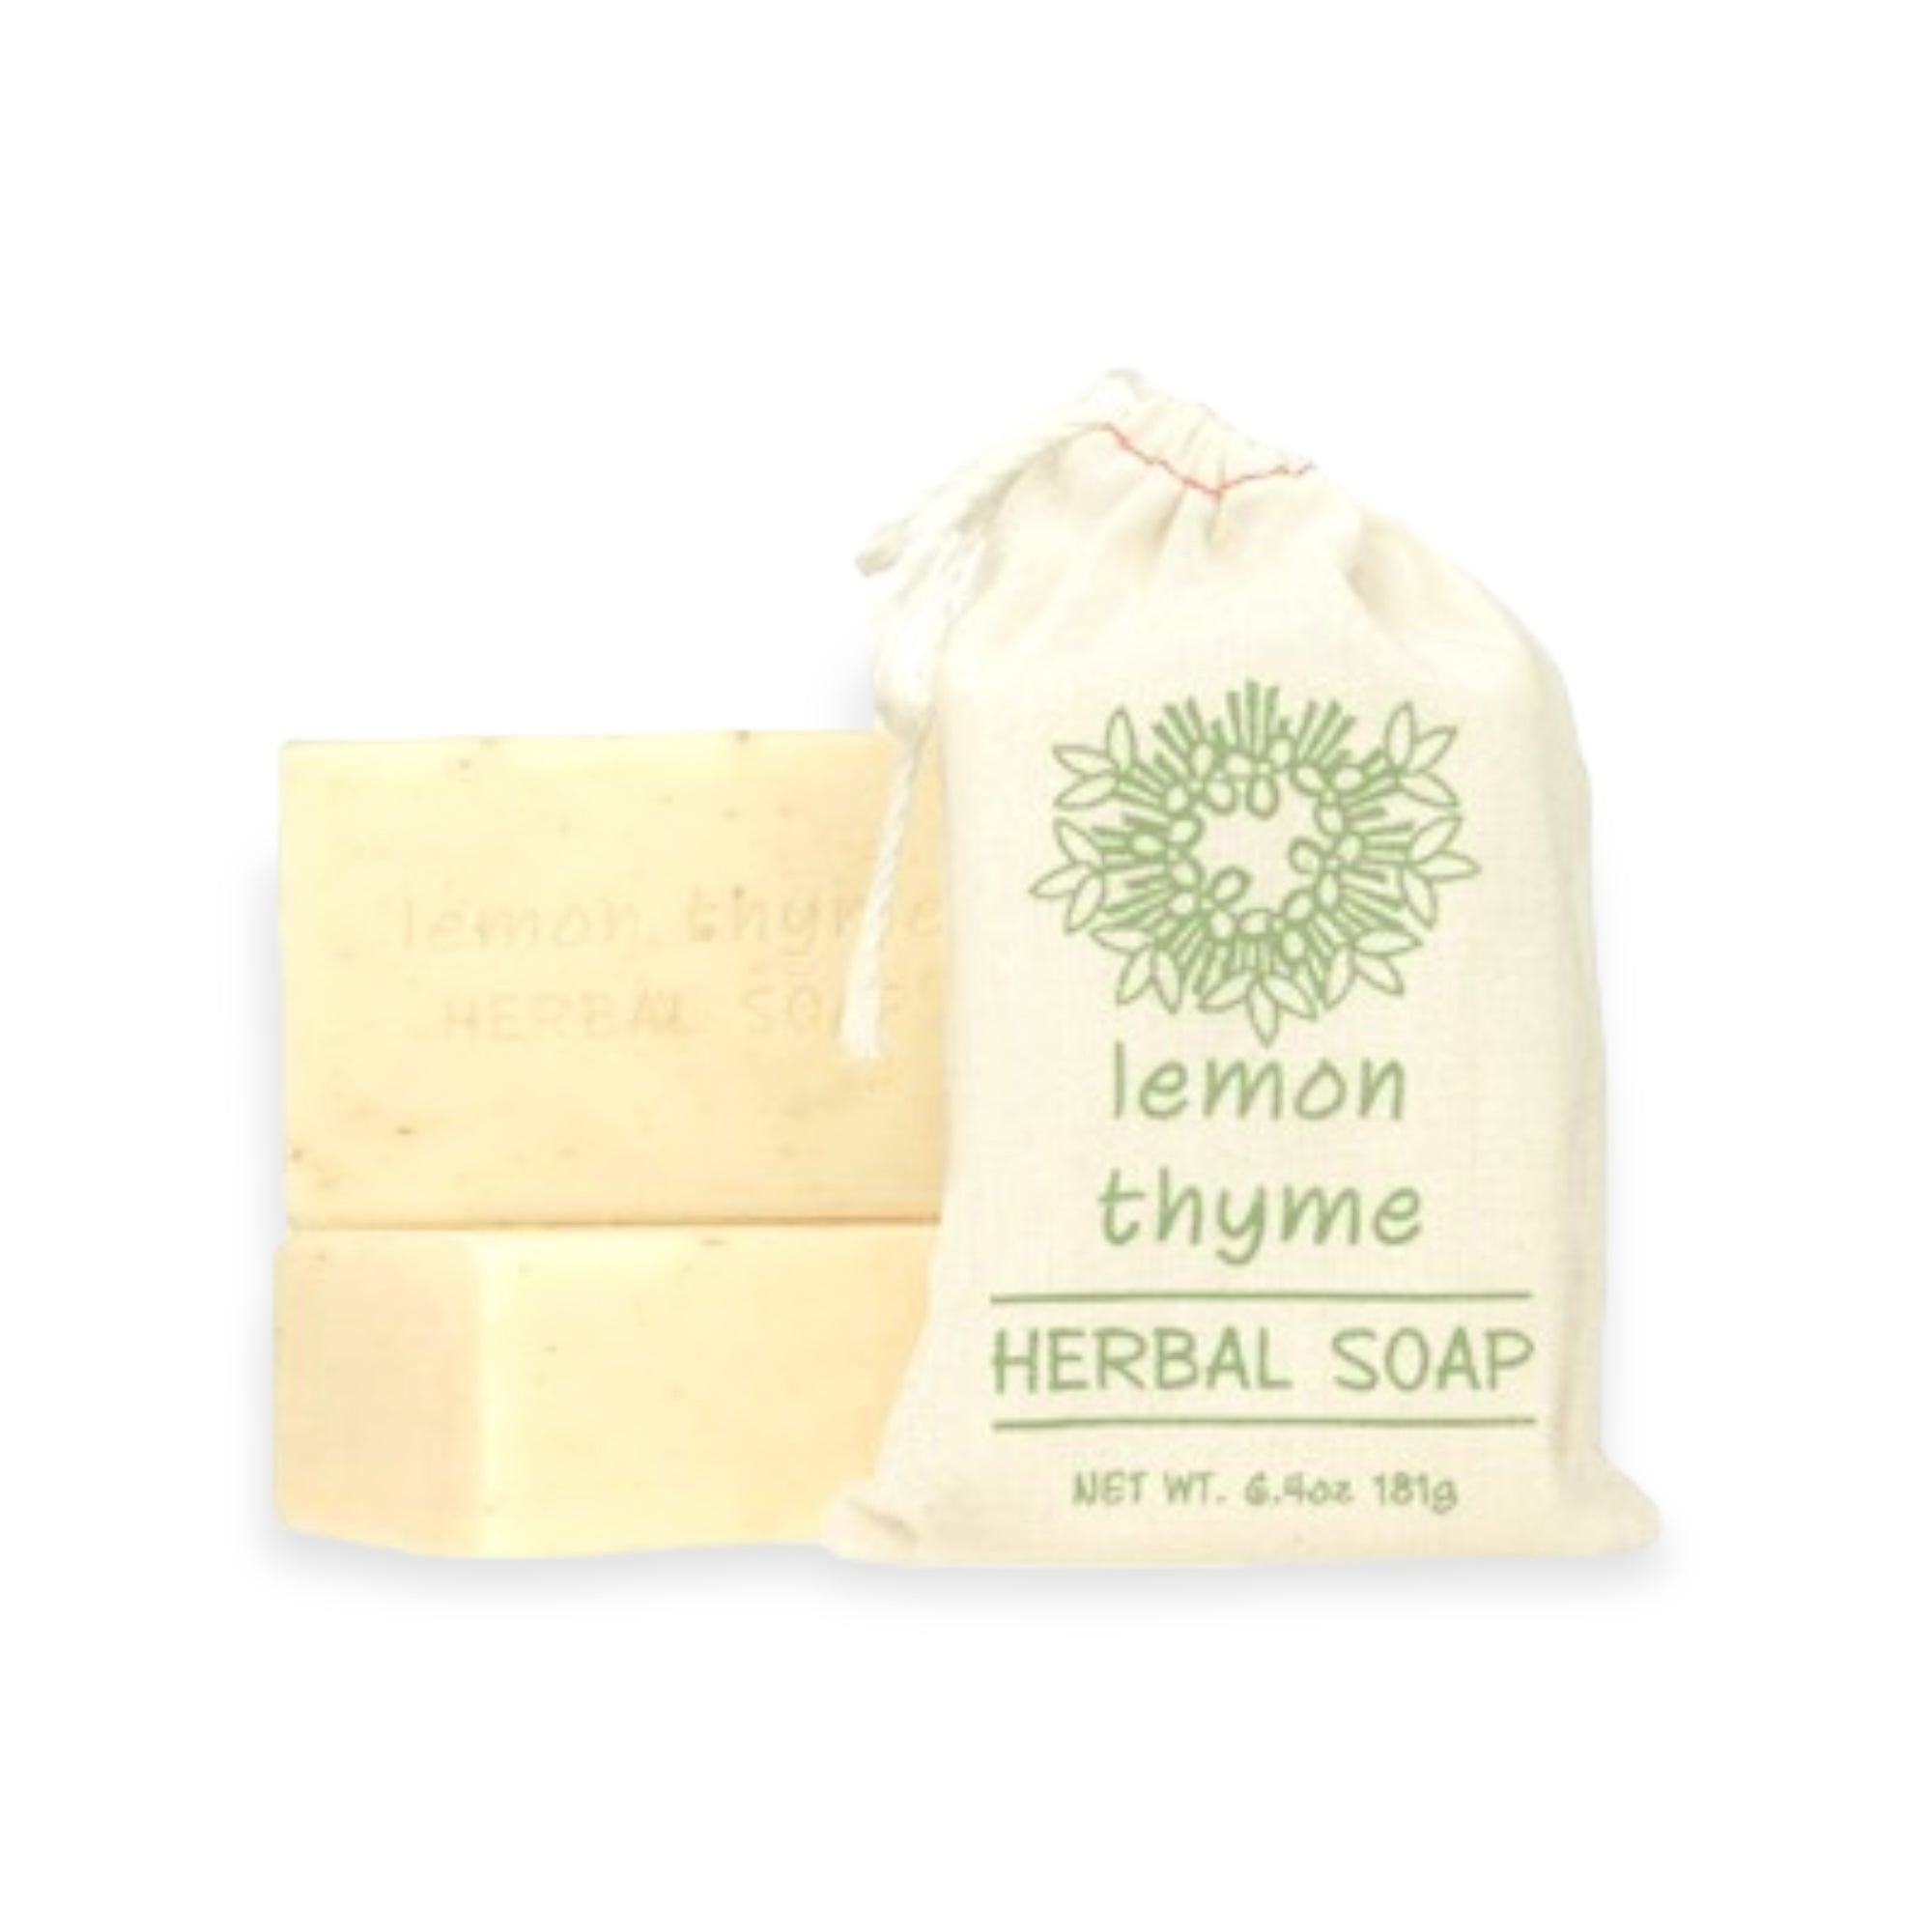 Lemon Thyme Herbal Soap by Greenwich Bay Trading Co.